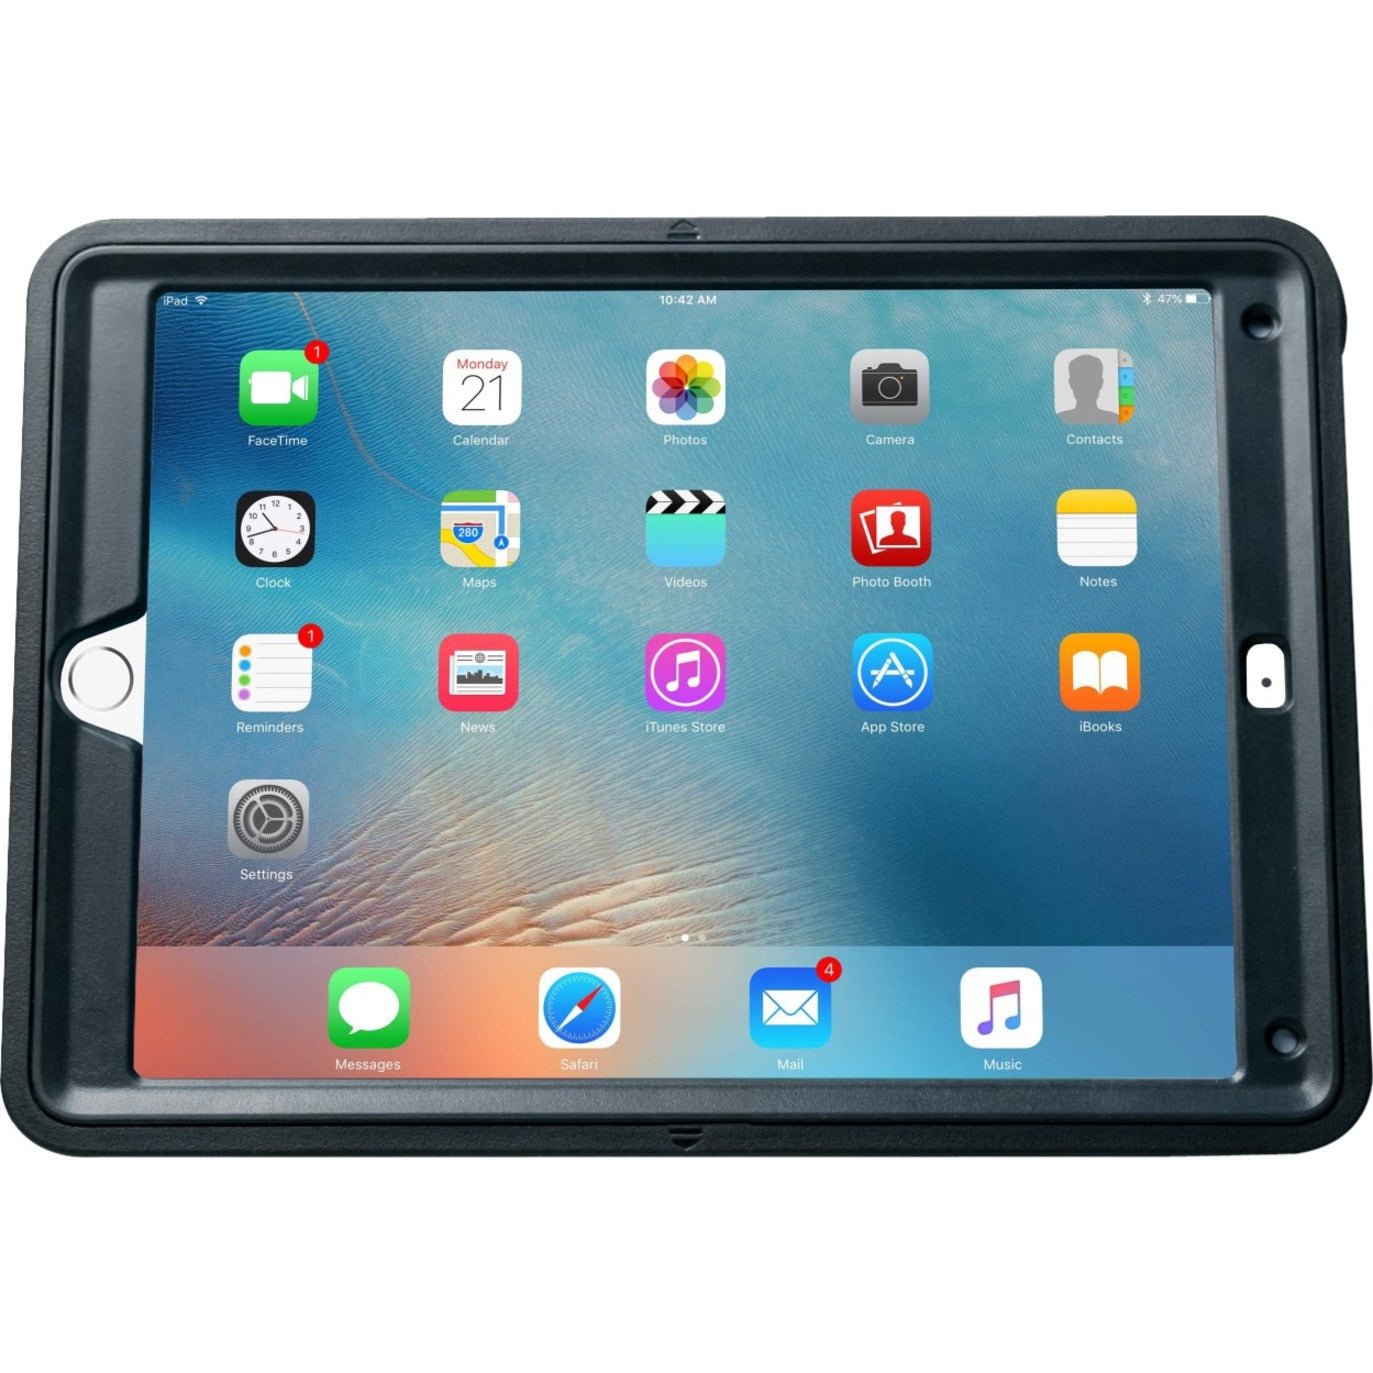 CTA Digital PAD-PCGK9 iPad Pro Case, 360-Degree Kickstand, Hand Strap, Hand Grip, Impact Resistance, Drop Resistant, Black